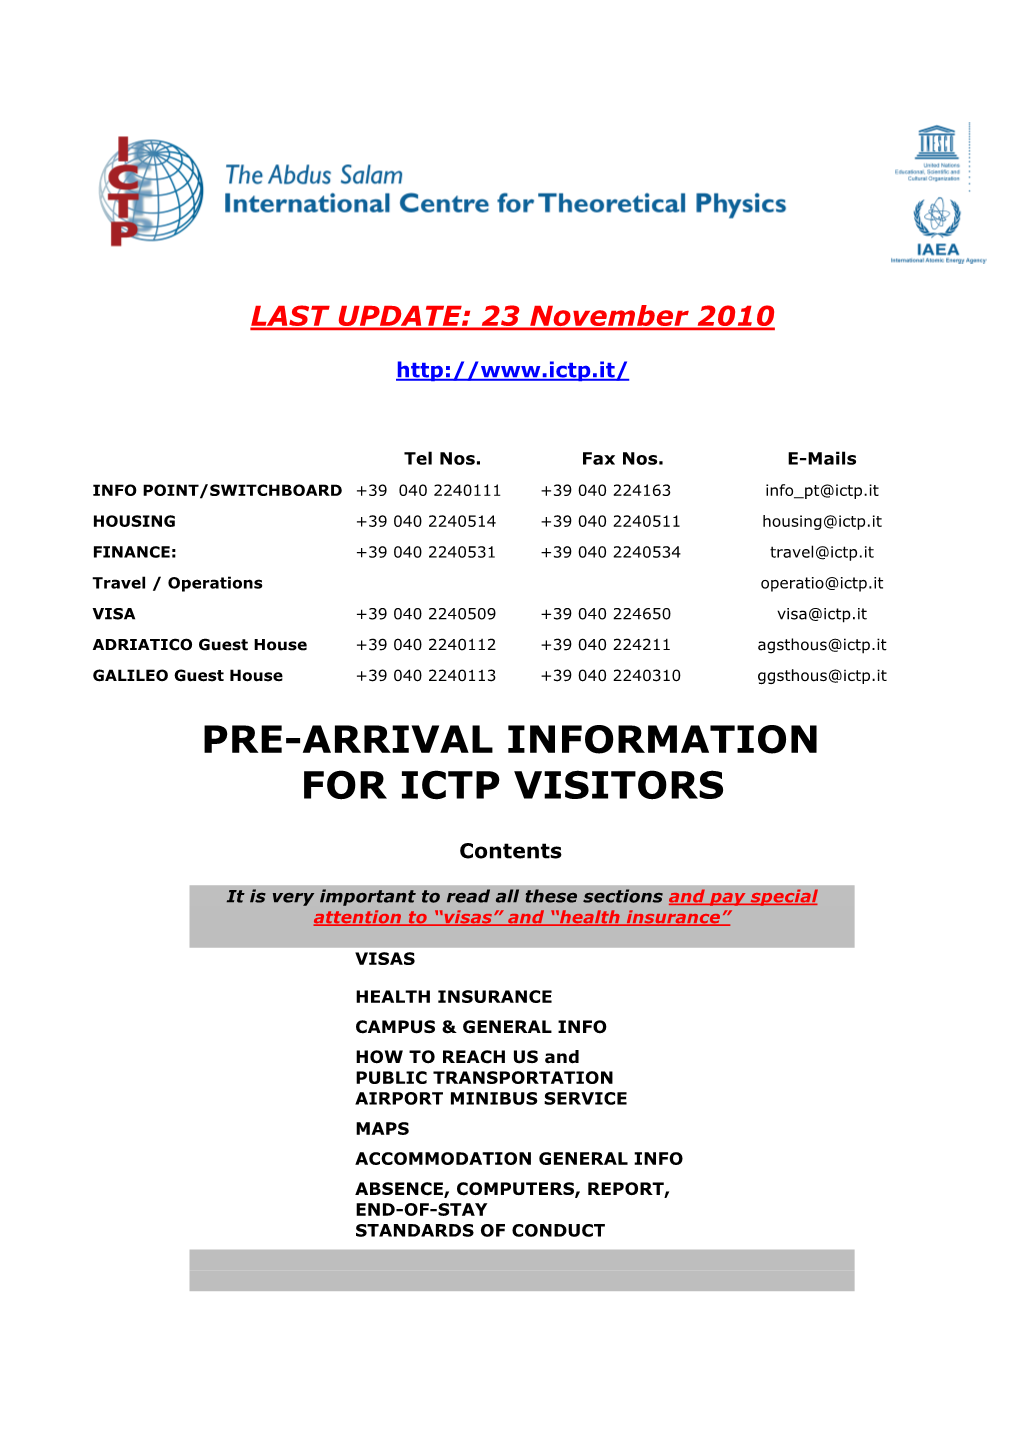 Pre-Arrival Information for Ictp Visitors